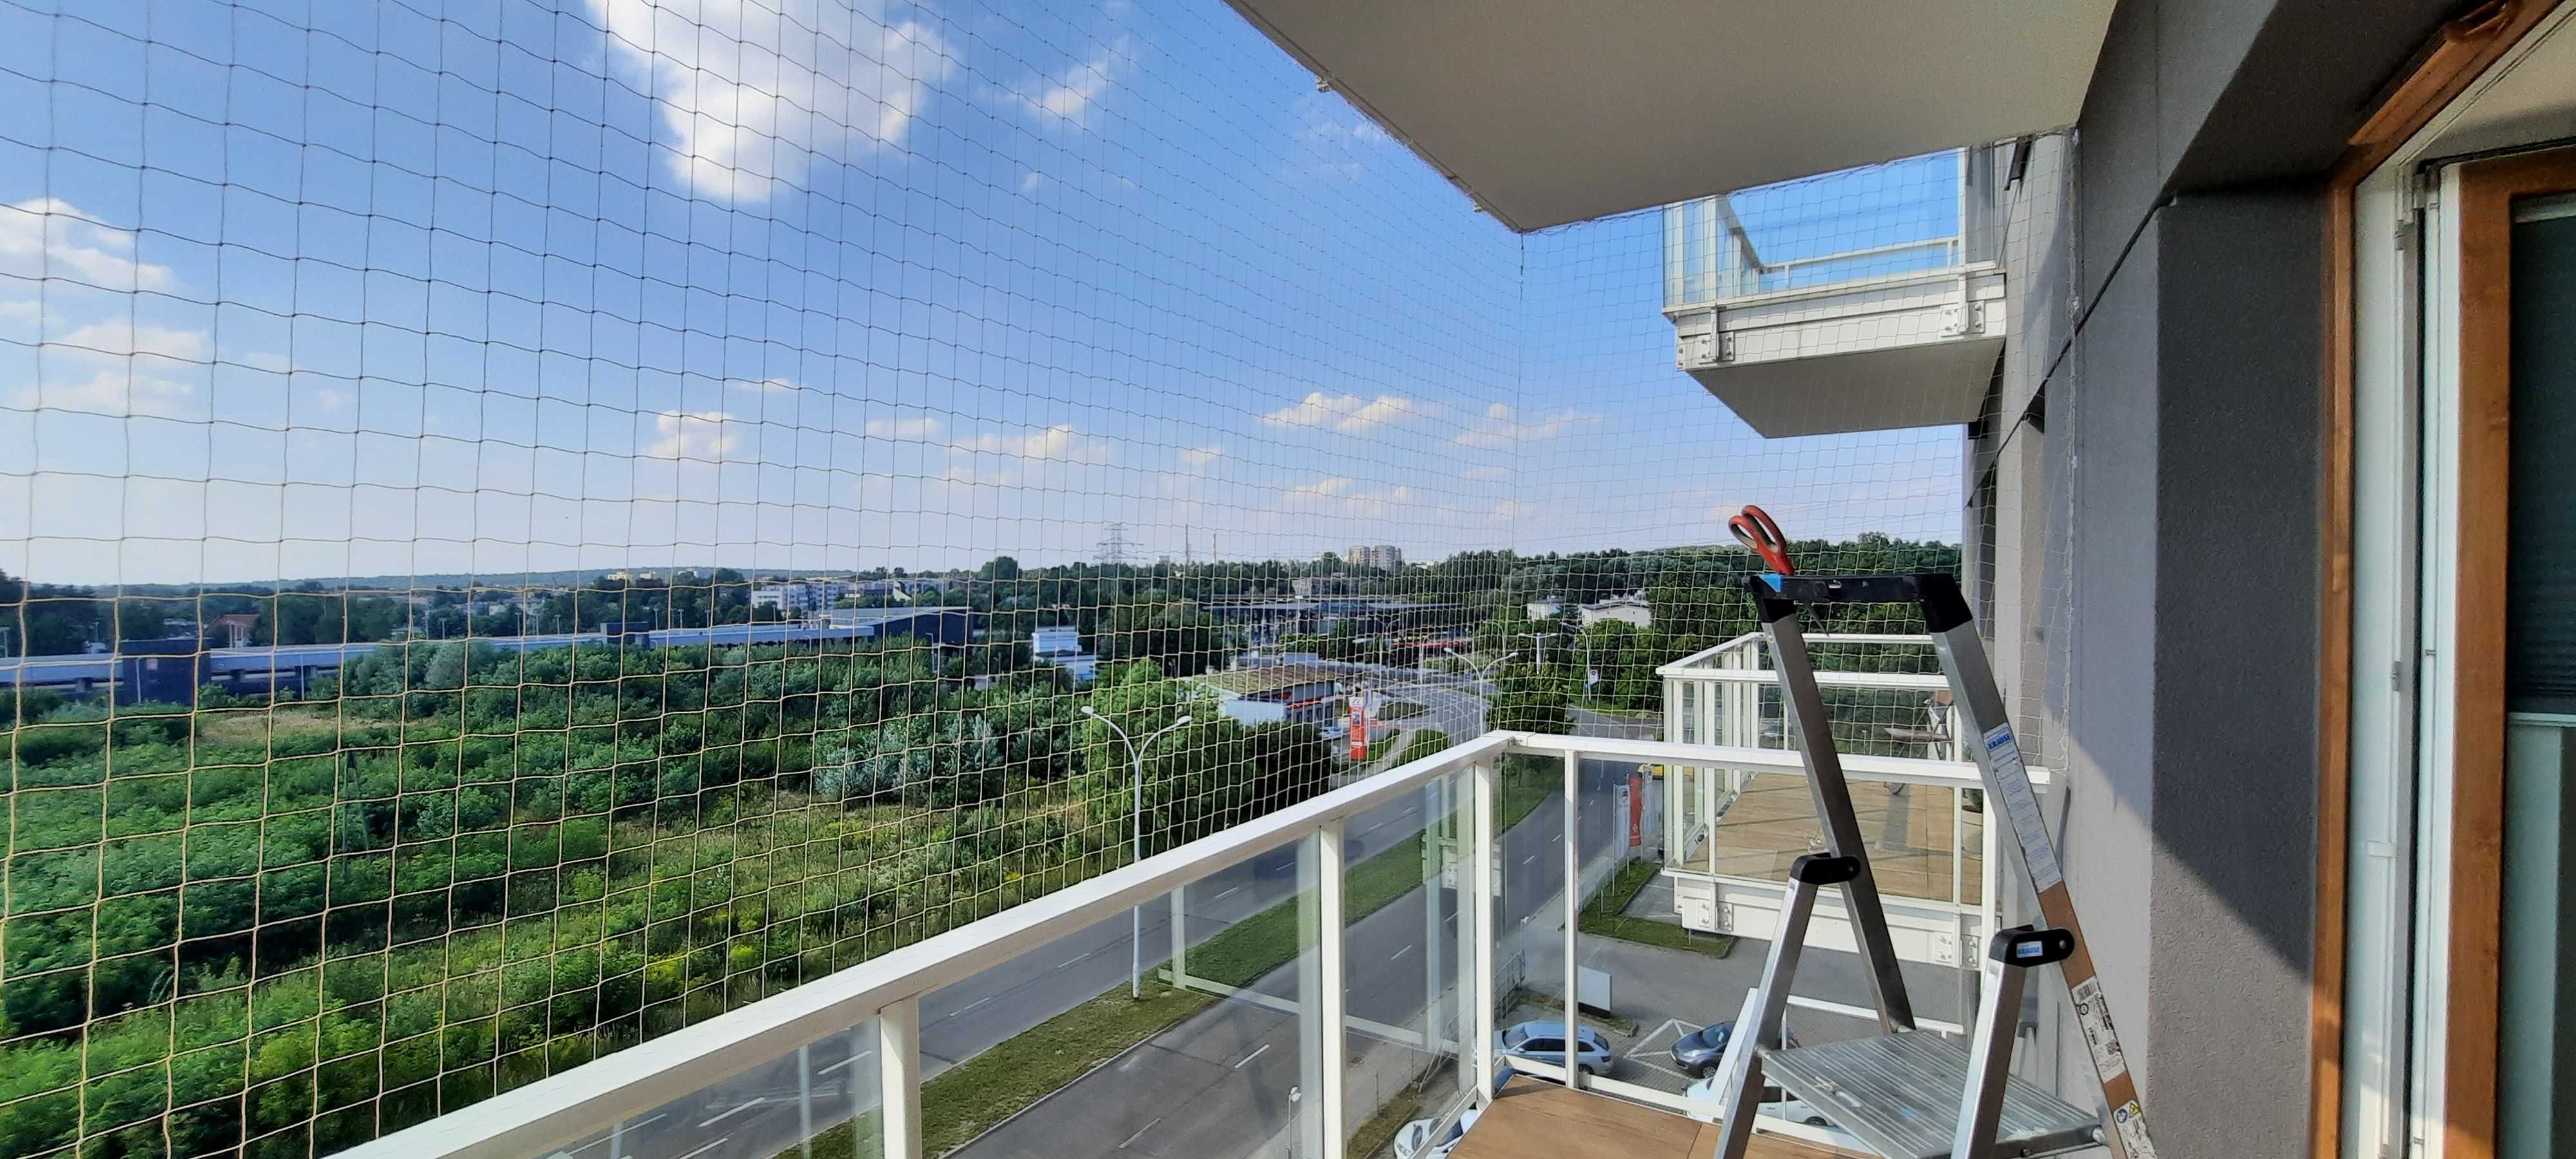 Siatka na balkon dla kota/ na ptaki zestaw 3x4m